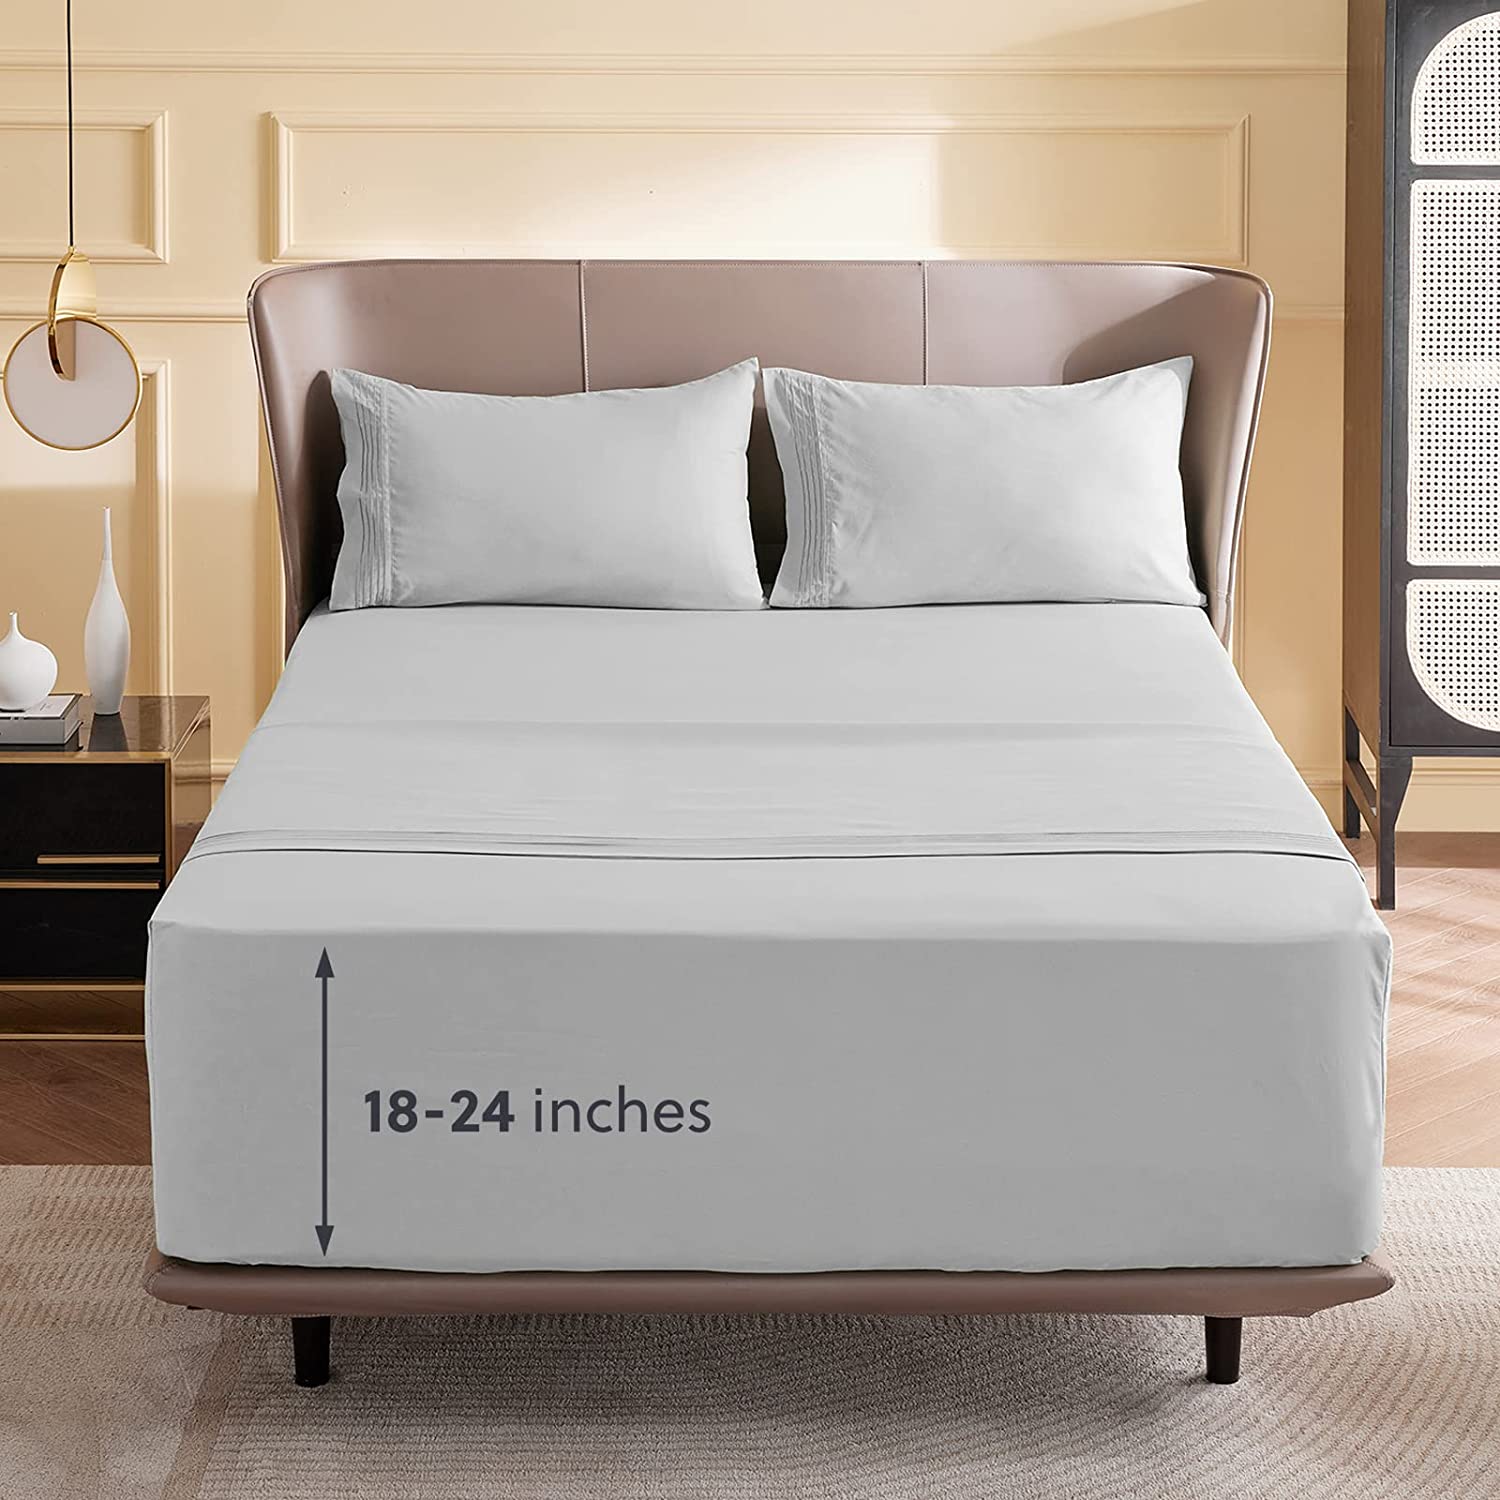 Bedsure Scotchguard Cooling Dorm Sheet Set, 3-Piece